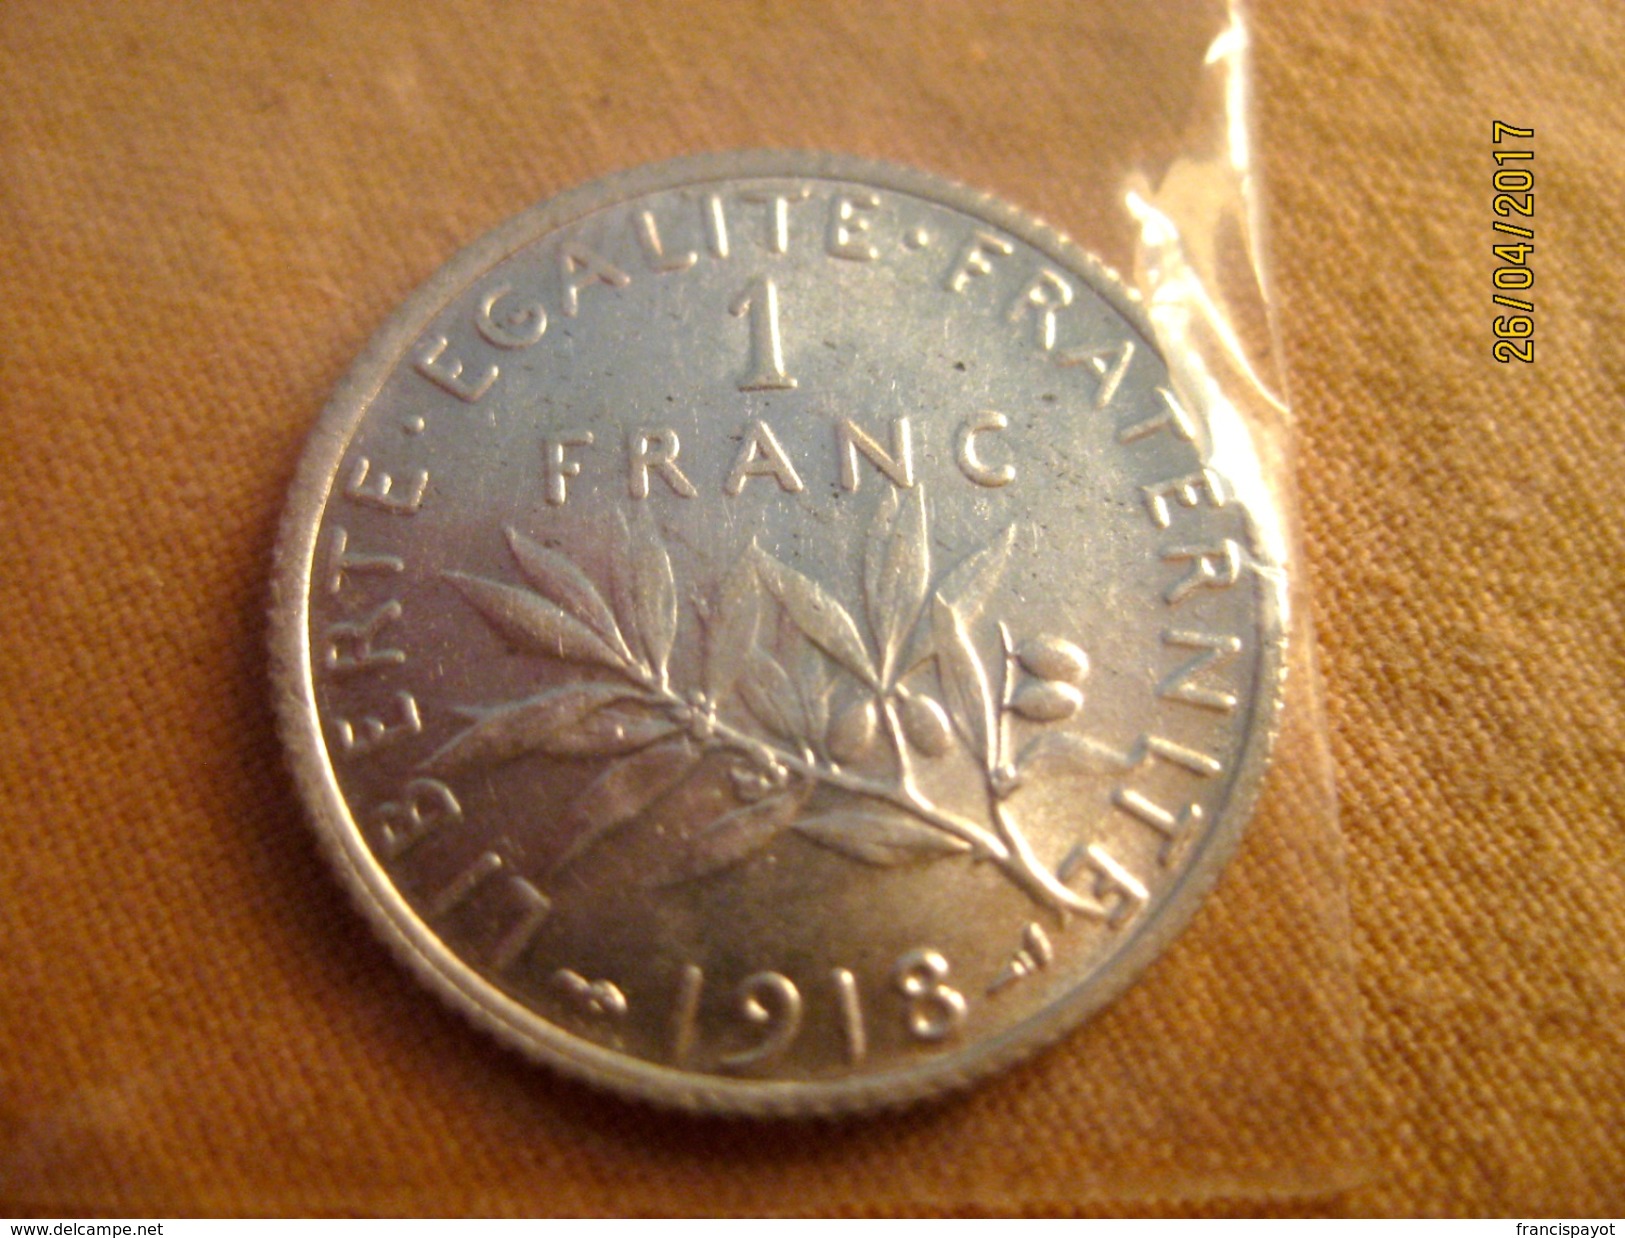 France 1 Franc 1918 (silver) - 1 Franc